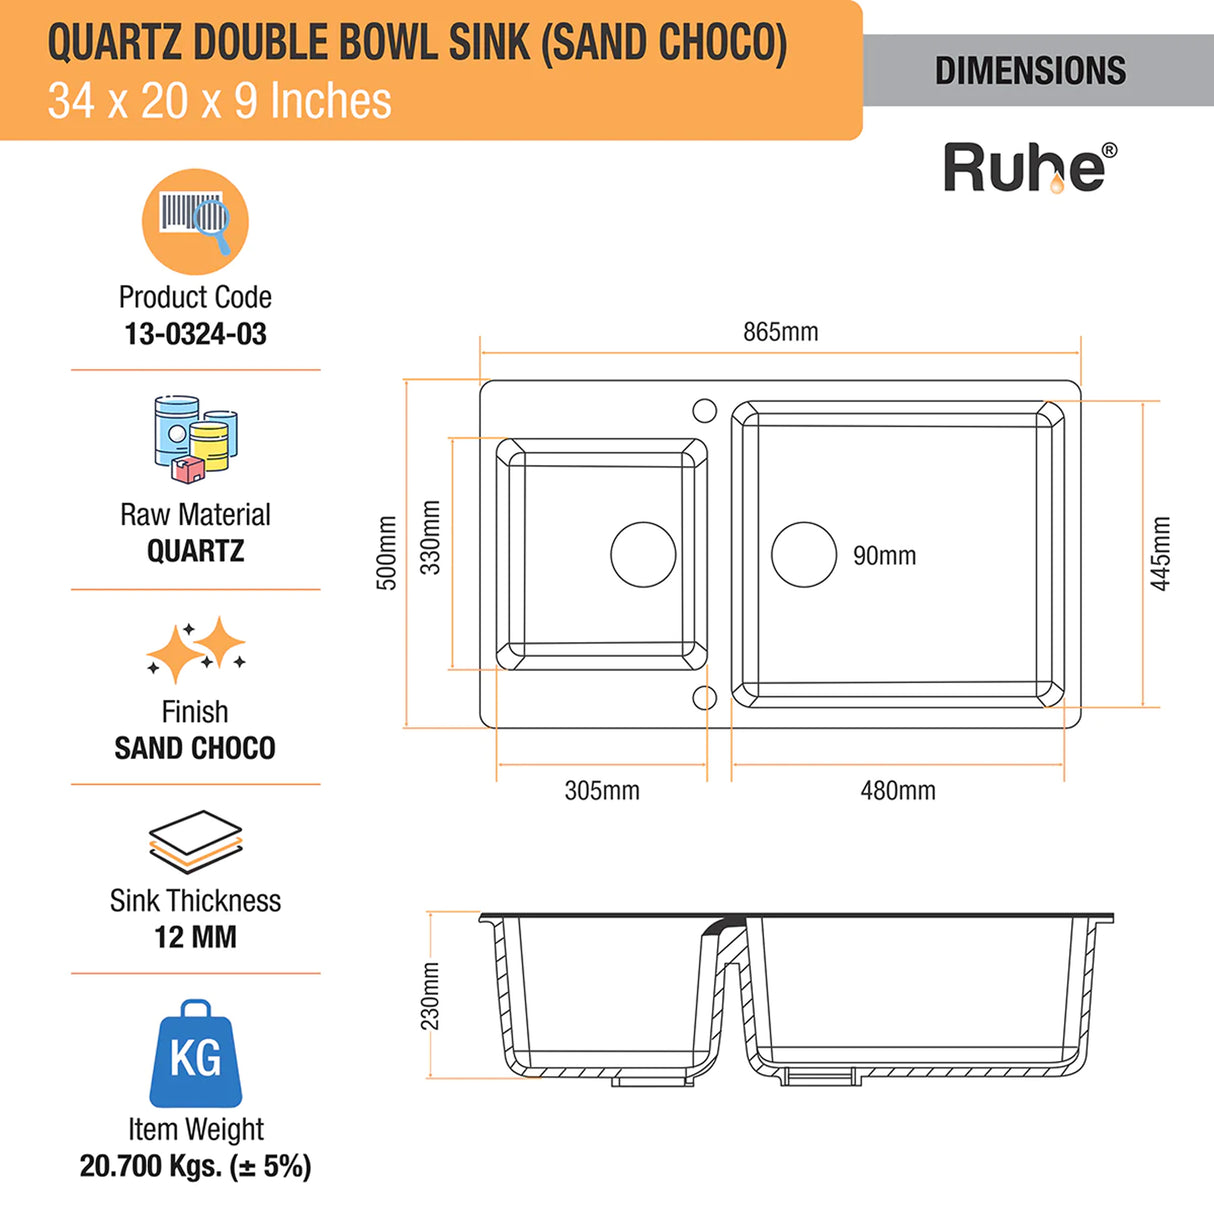 Quartz Double Bowl Kitchen Sink - Sand Choco (34 x 20 x 9 inches) - by Ruhe®